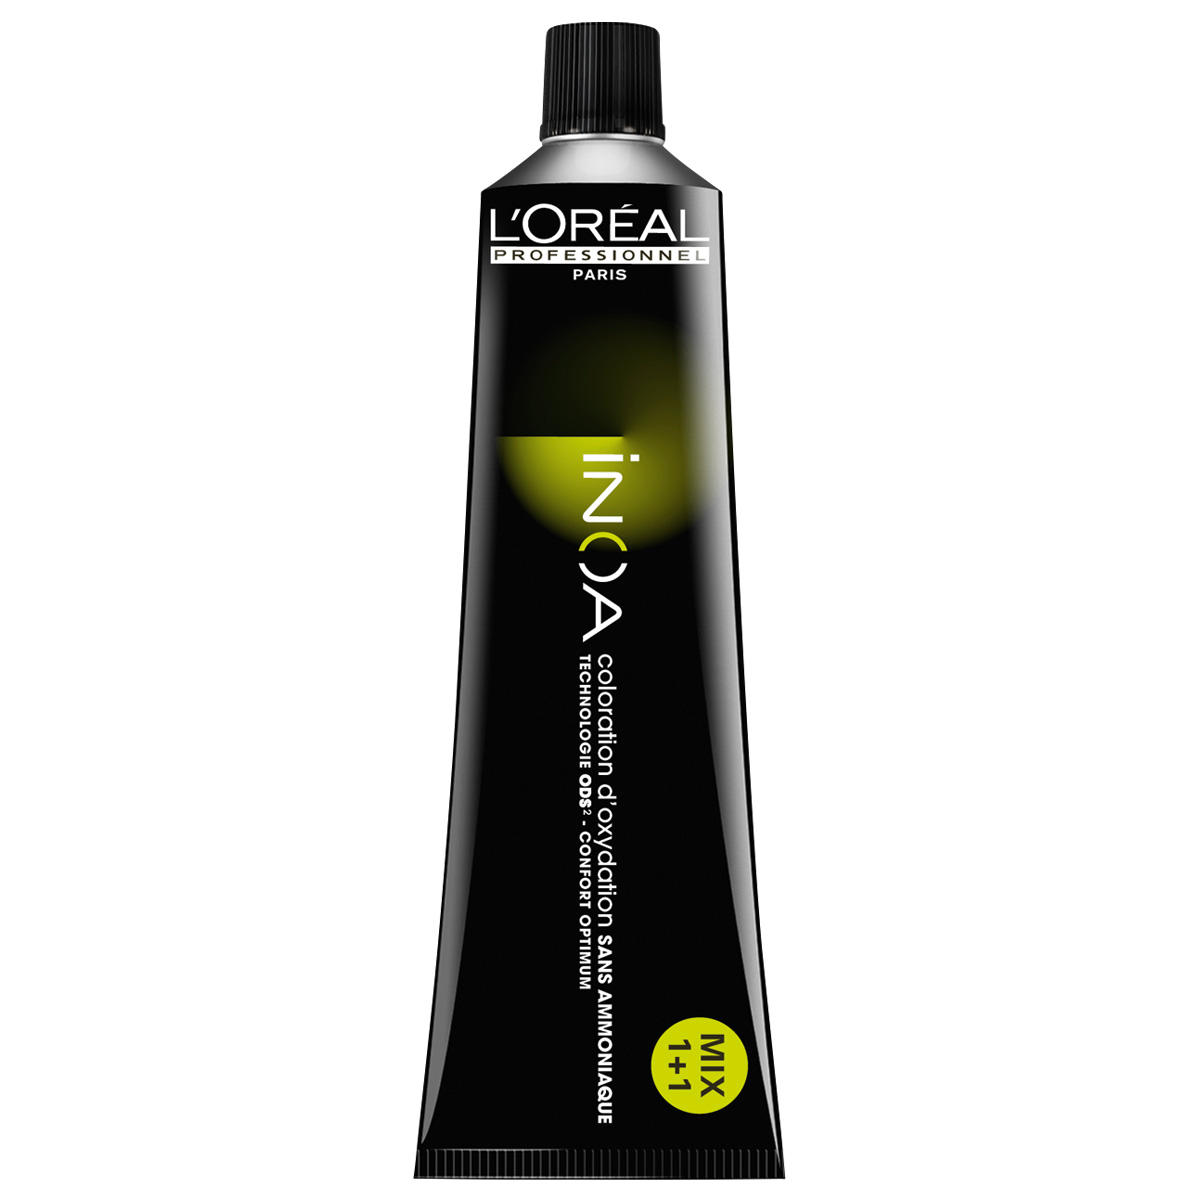 L'Oréal Professionnel Paris Coloration 4.8 medium bruin mokka, tube 60 ml